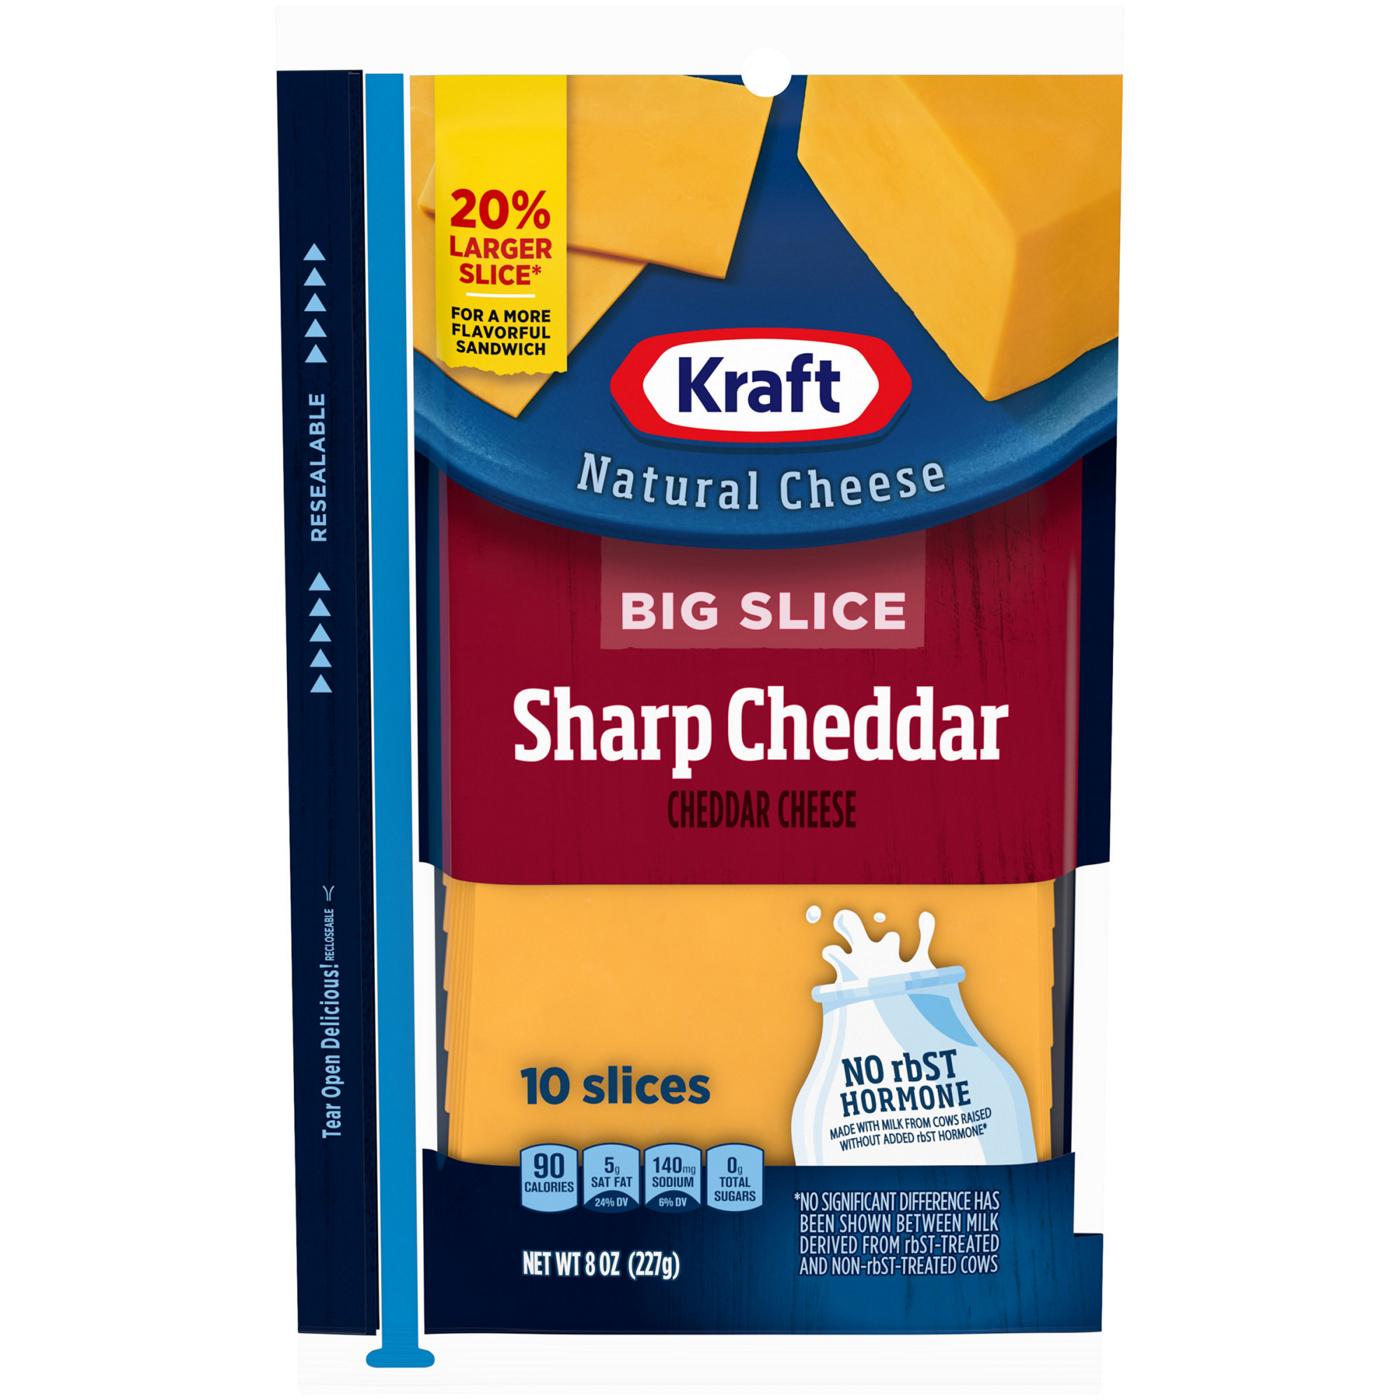 Kraft Sharp Cheddar Big Slice Cheese; image 1 of 2